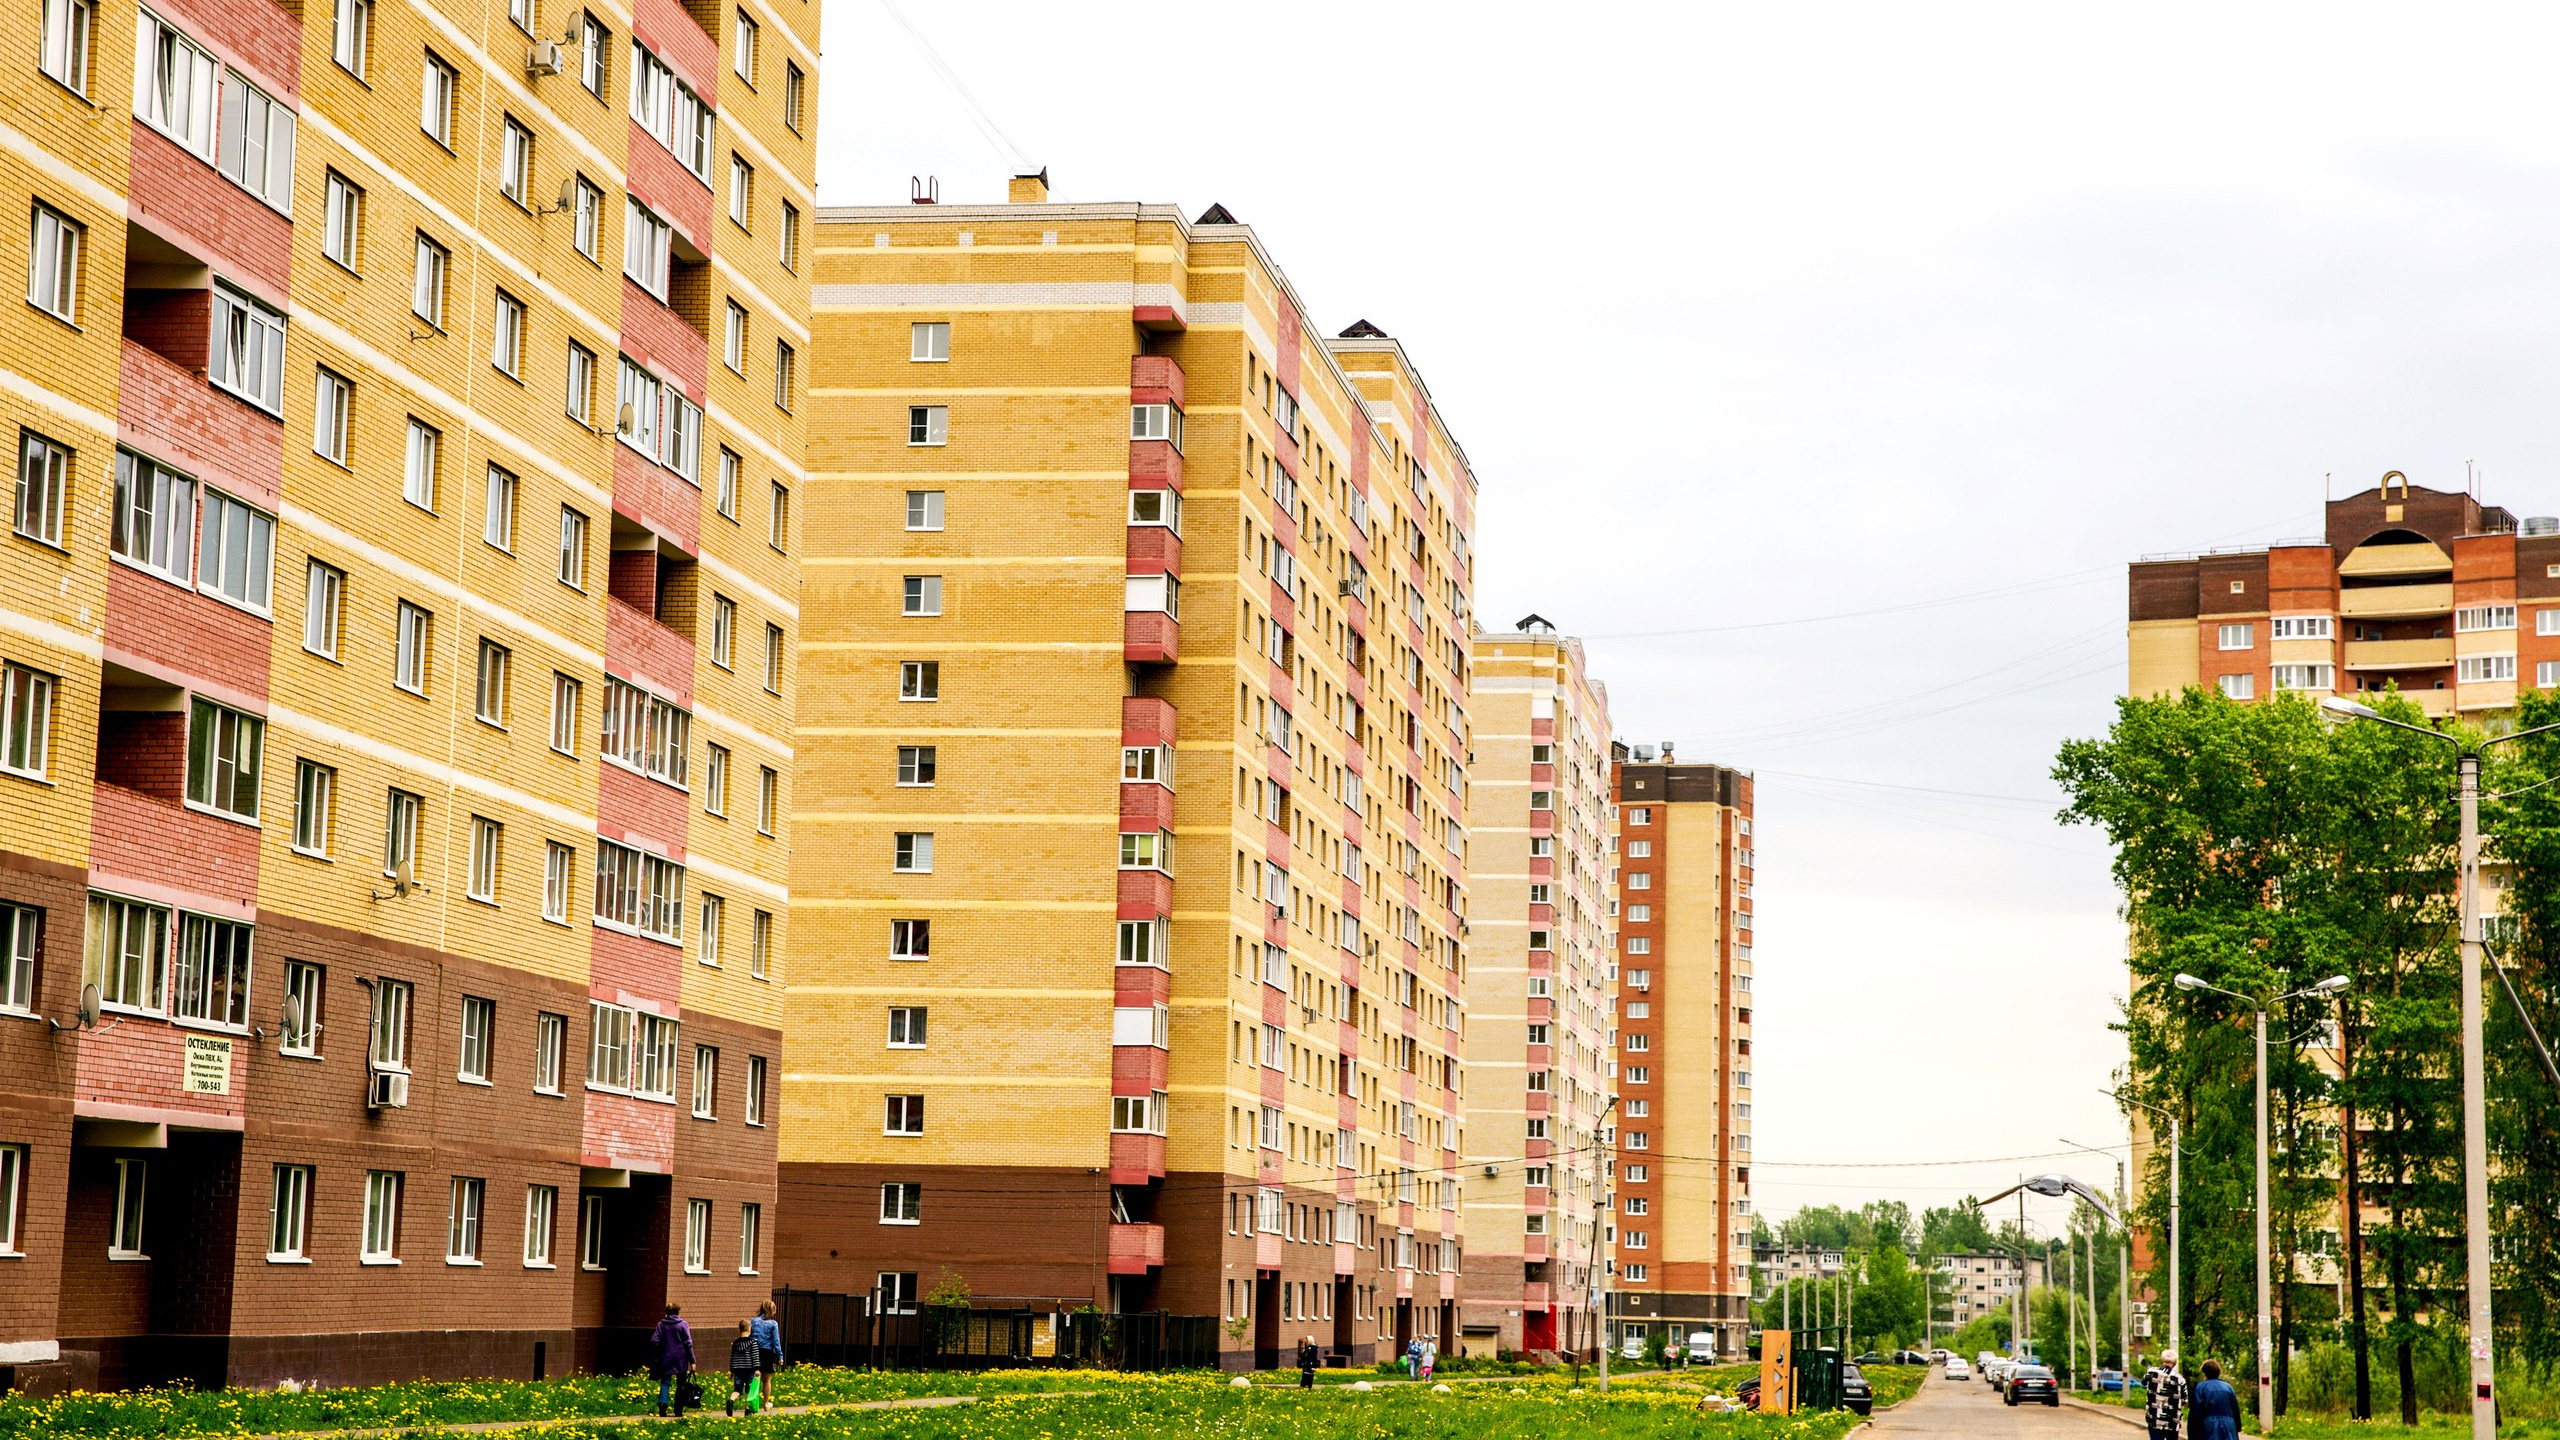 Квартирные махинации: как не наткнуться на мошенников при съеме и сдаче жилья в Ярославле